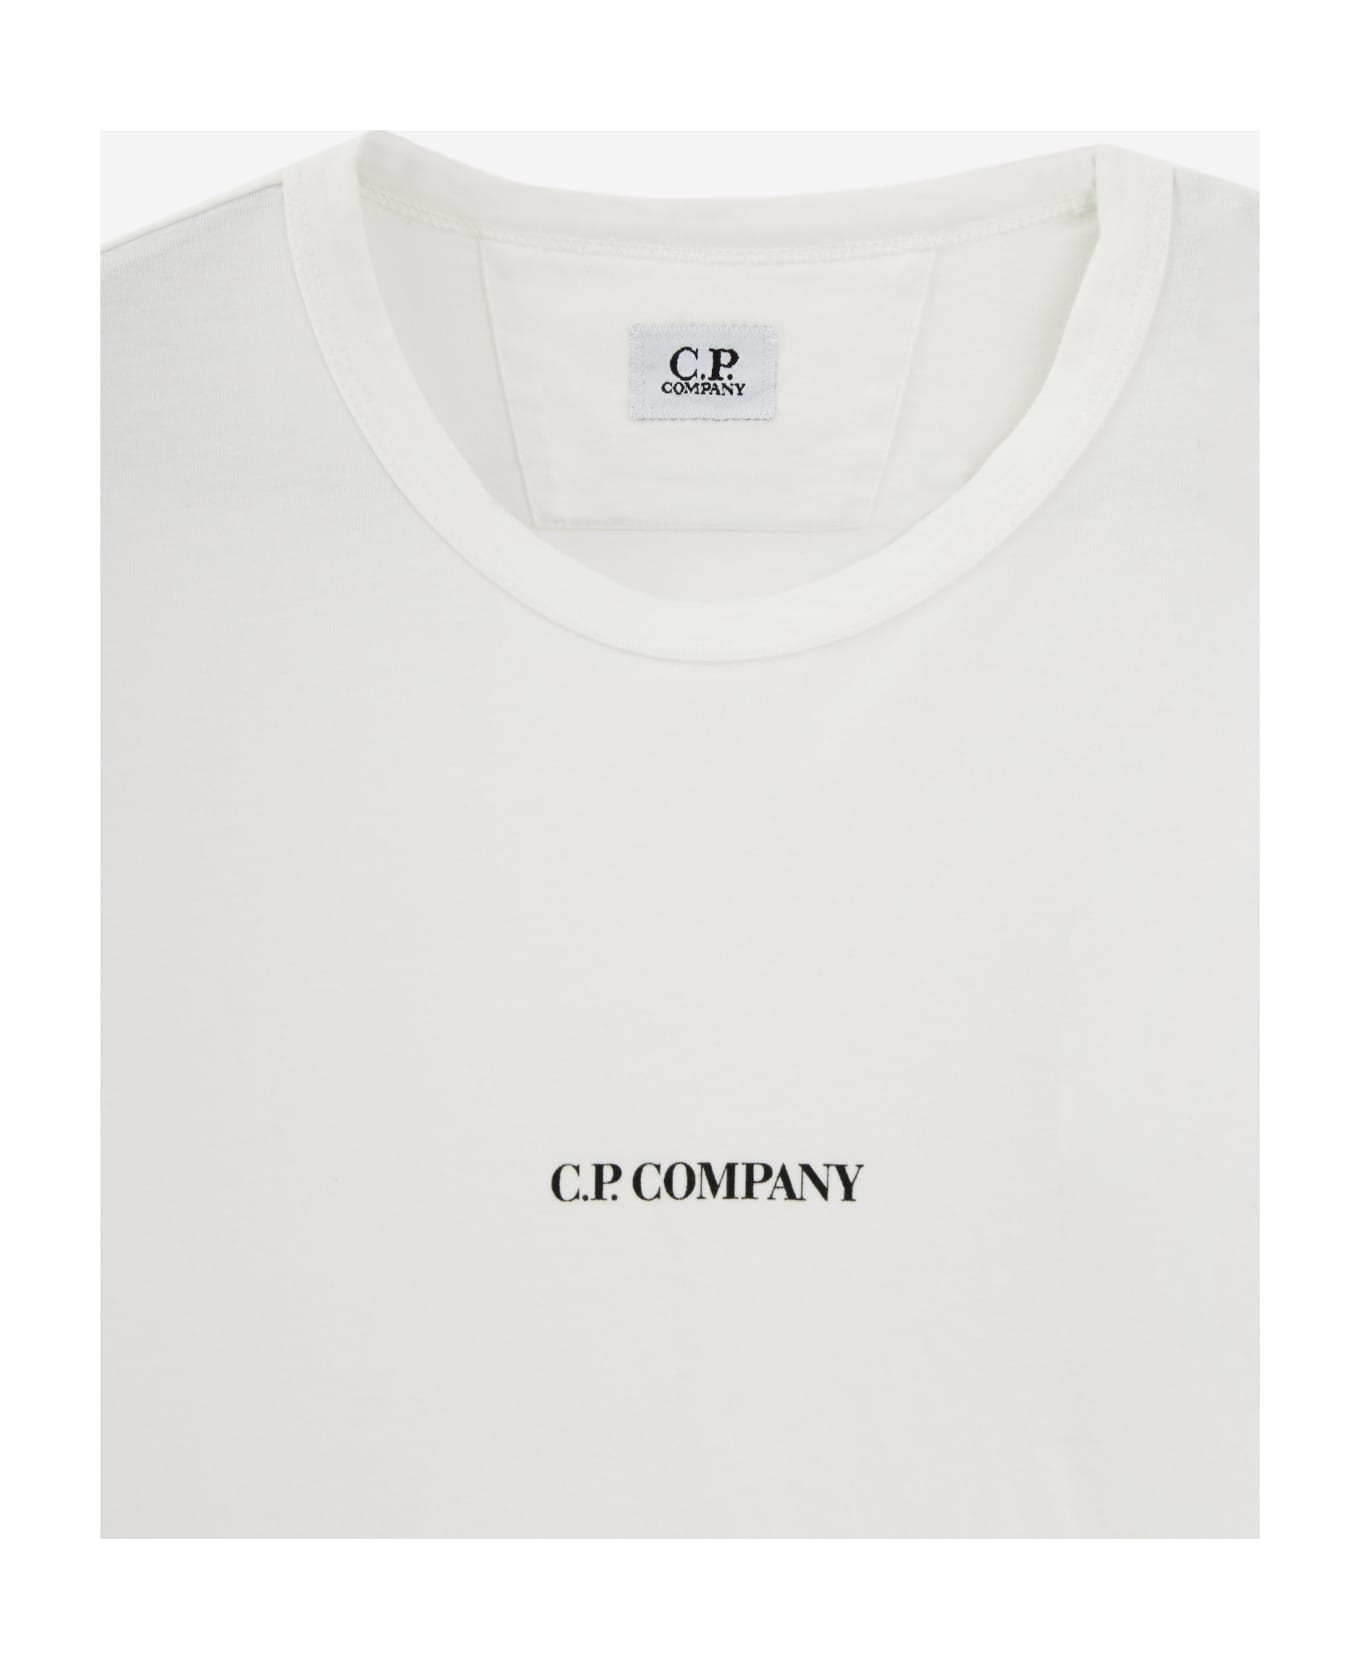 C.P. Company T-shirt - white シャツ